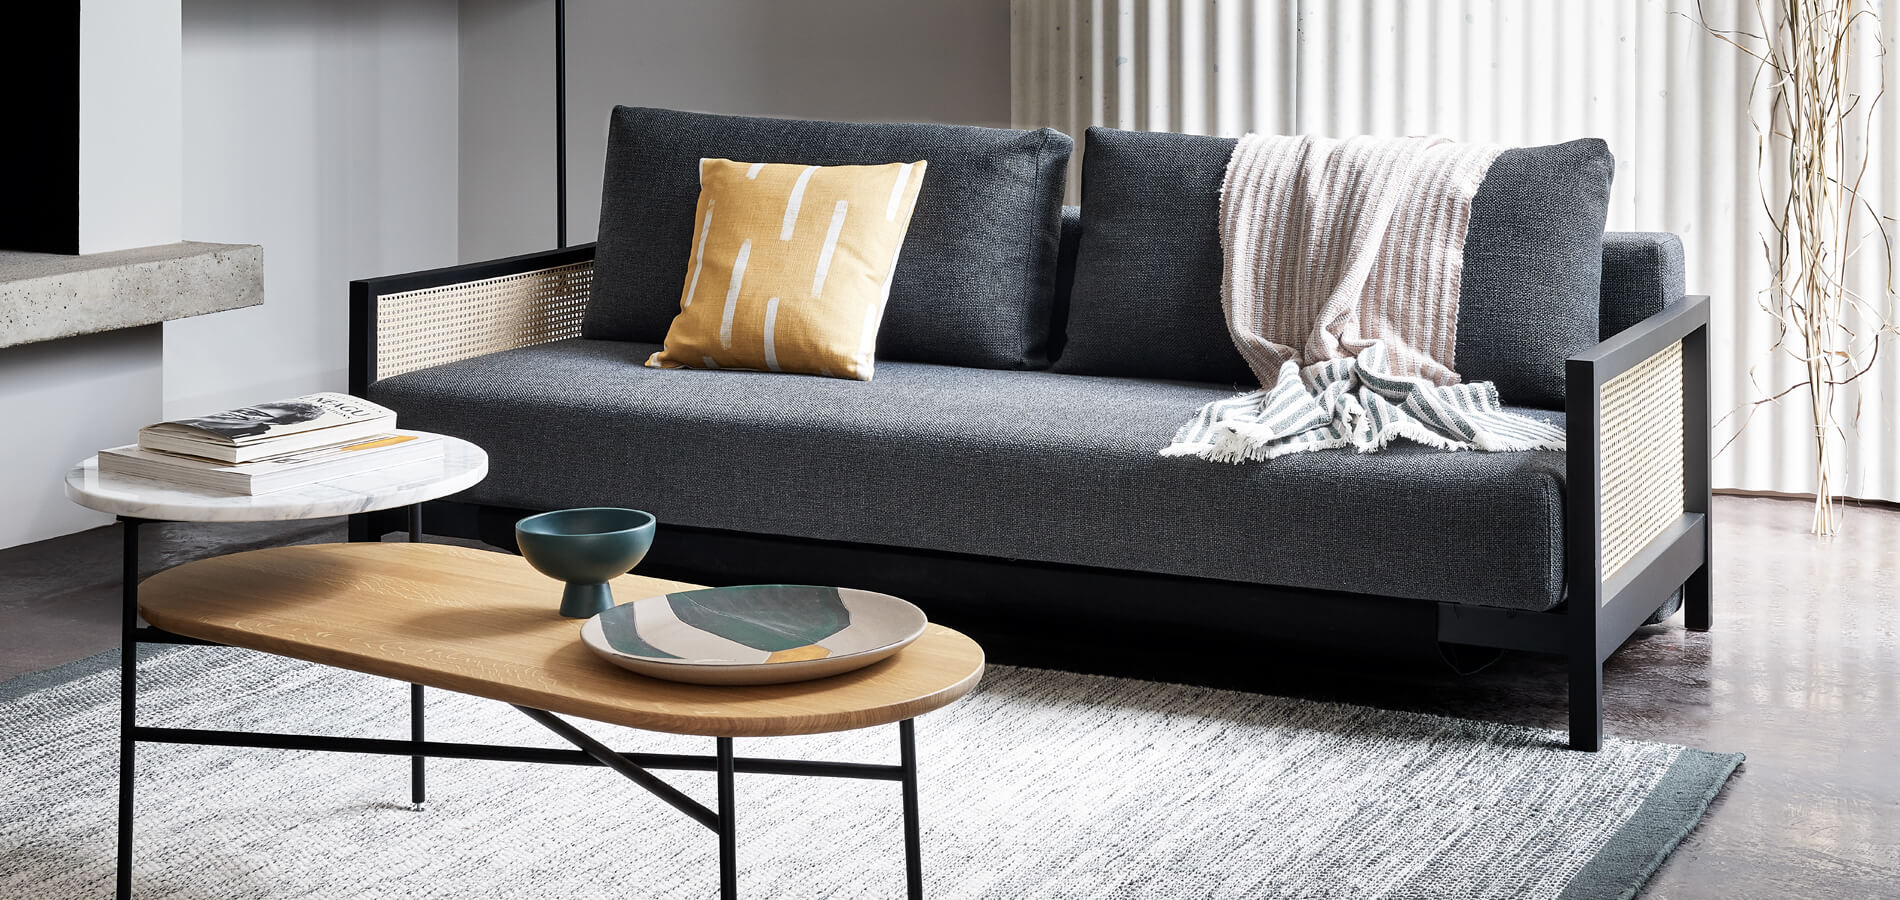 Arrange Cushions On A Sofa